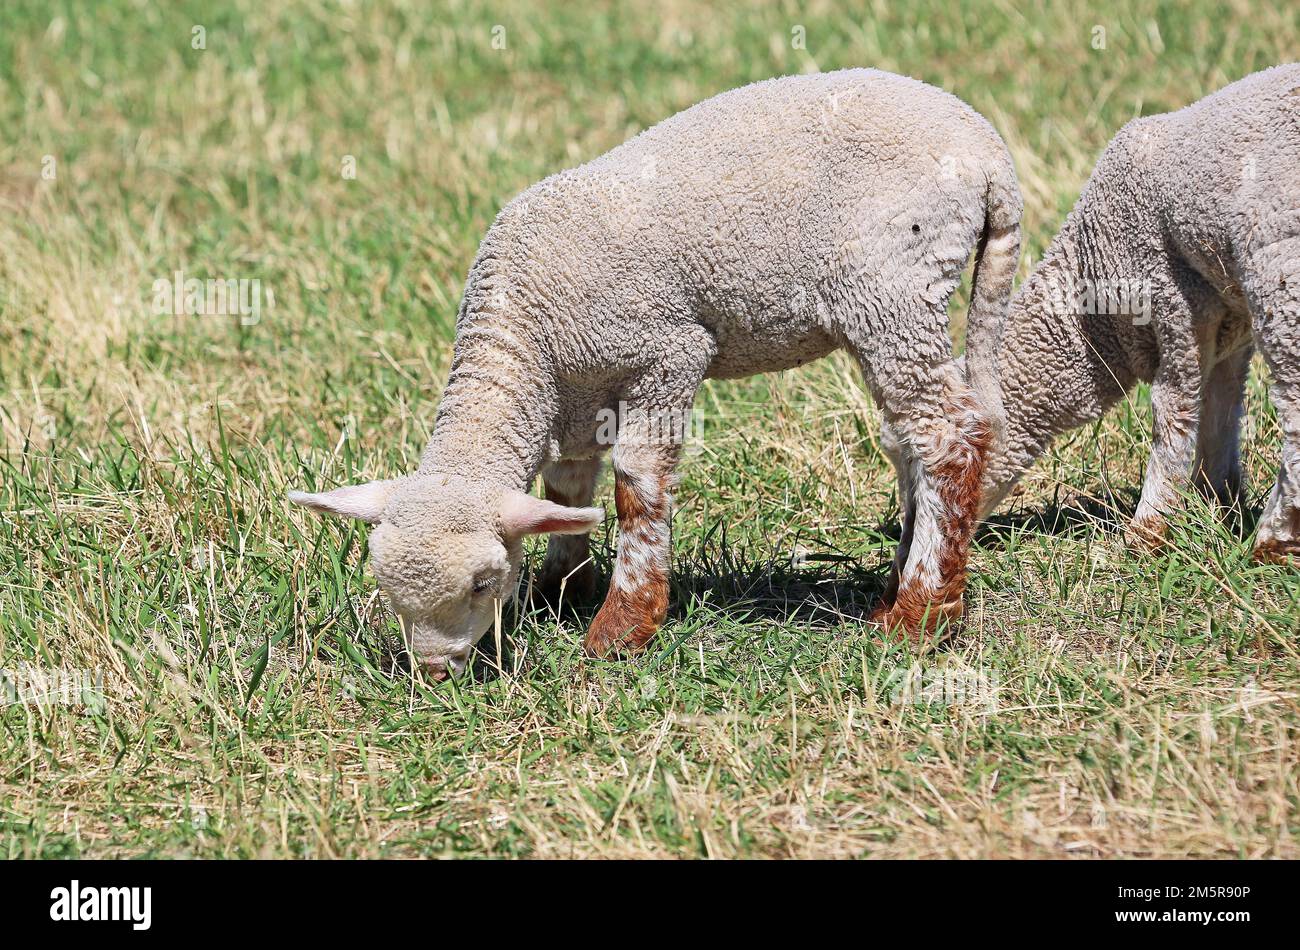 Young sheep grazing Stock Photo